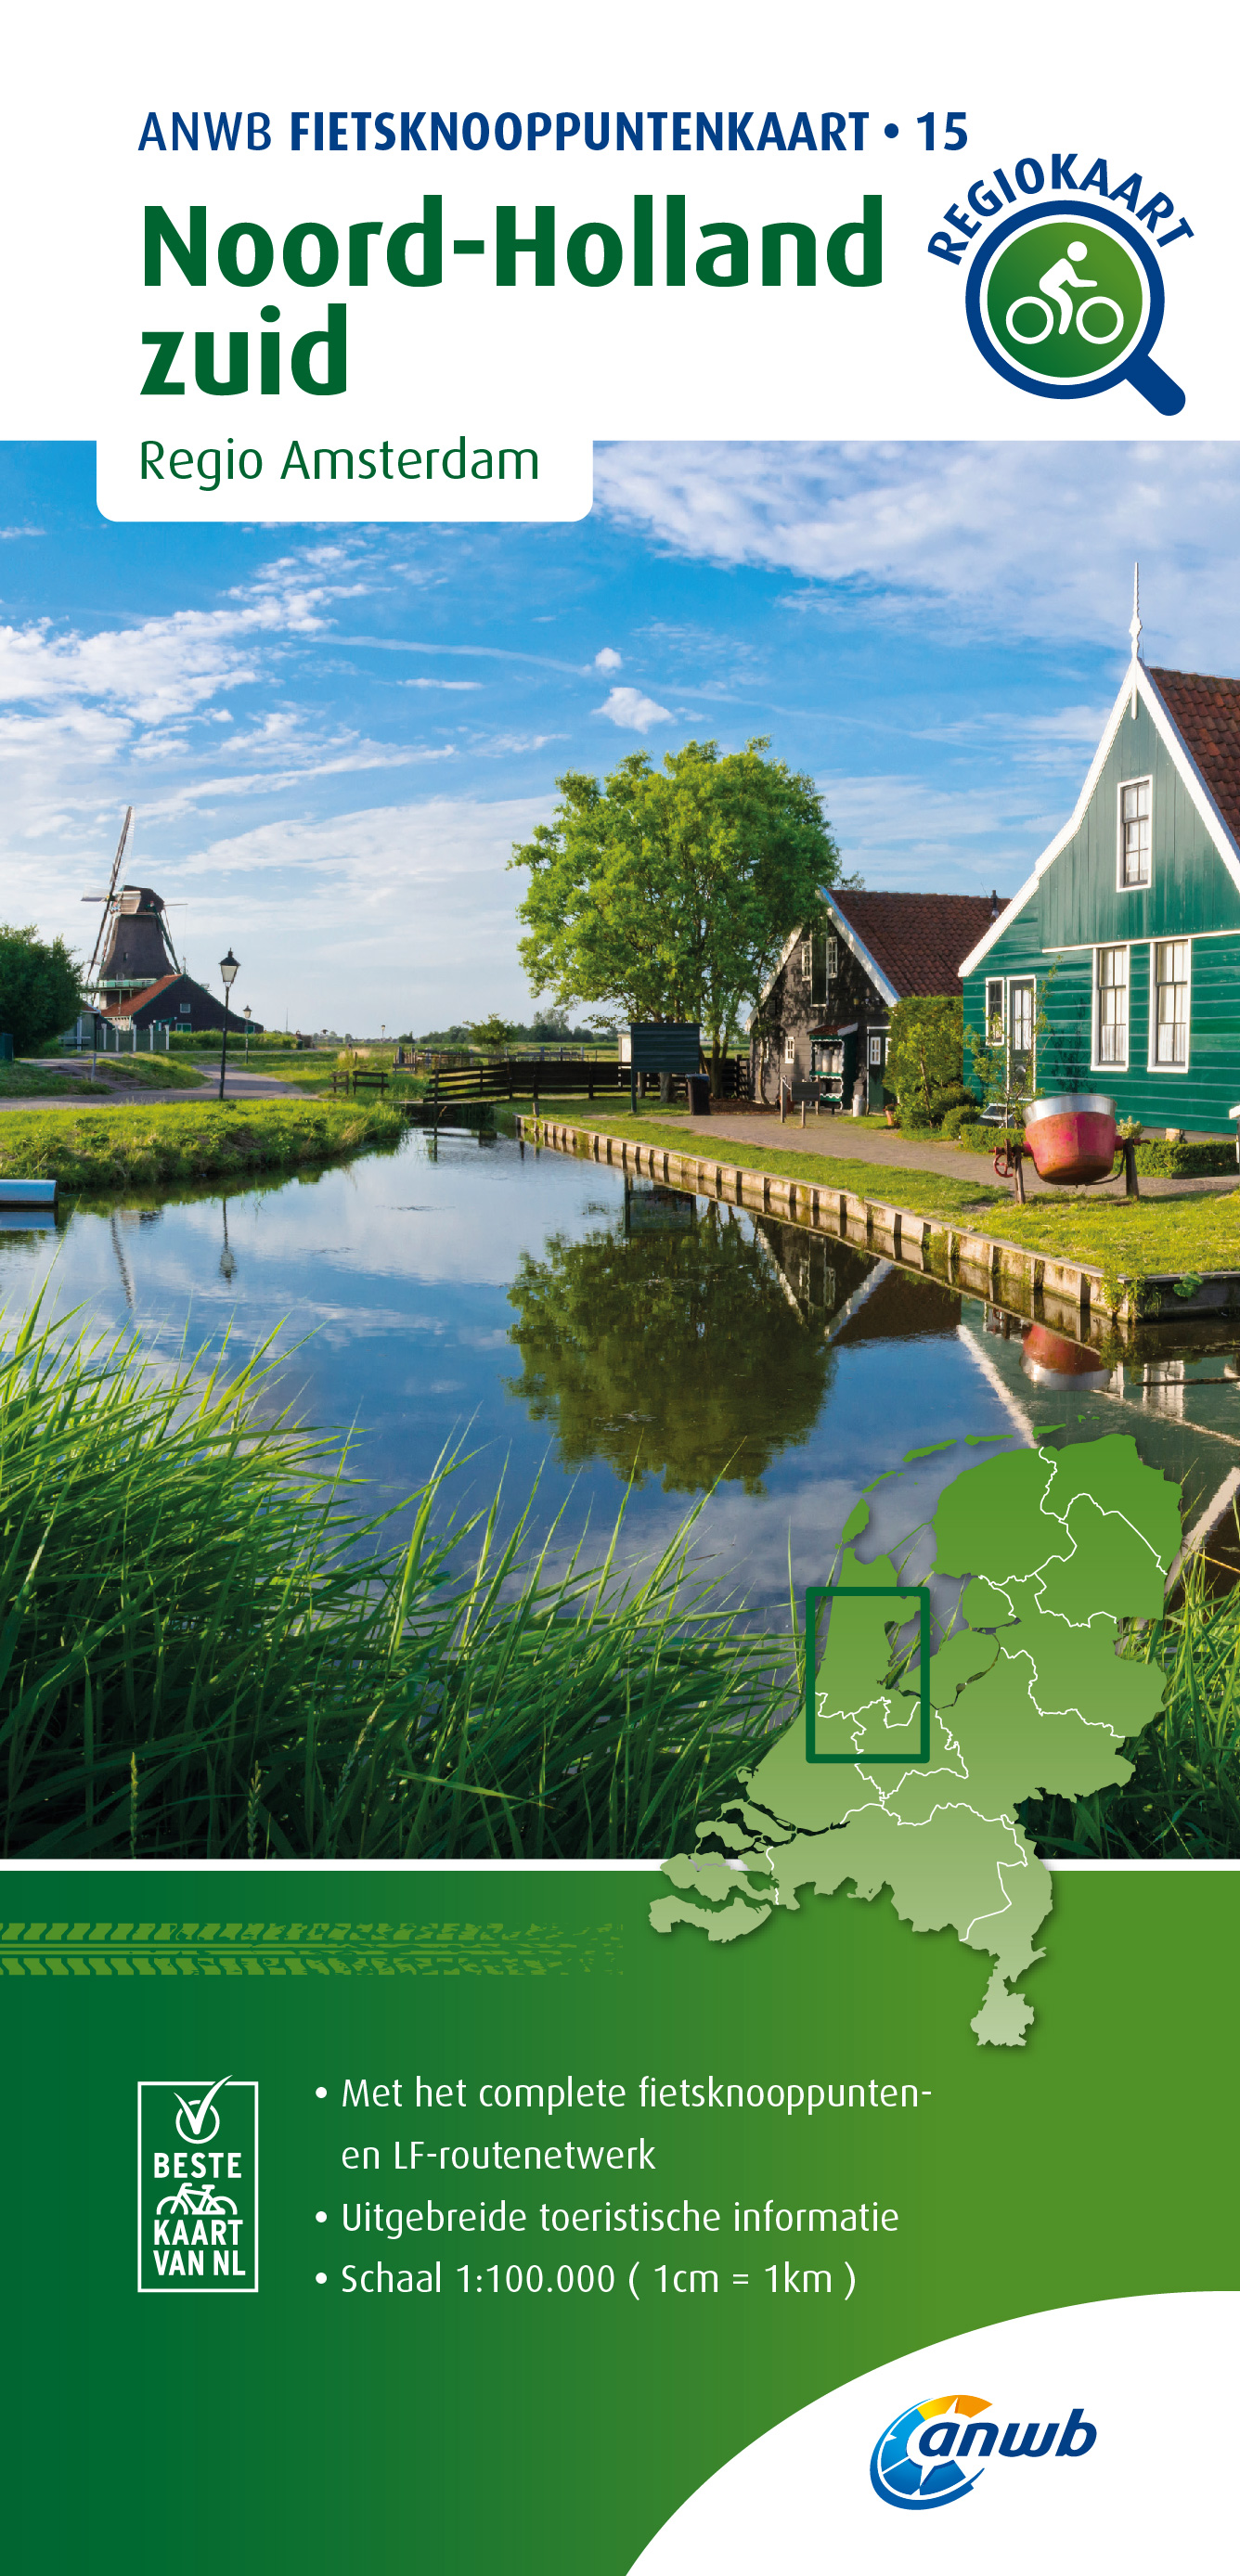 Online bestellen: Fietskaart 15 Regio Fietsknooppuntenkaart Noord Holland zuid | ANWB Media